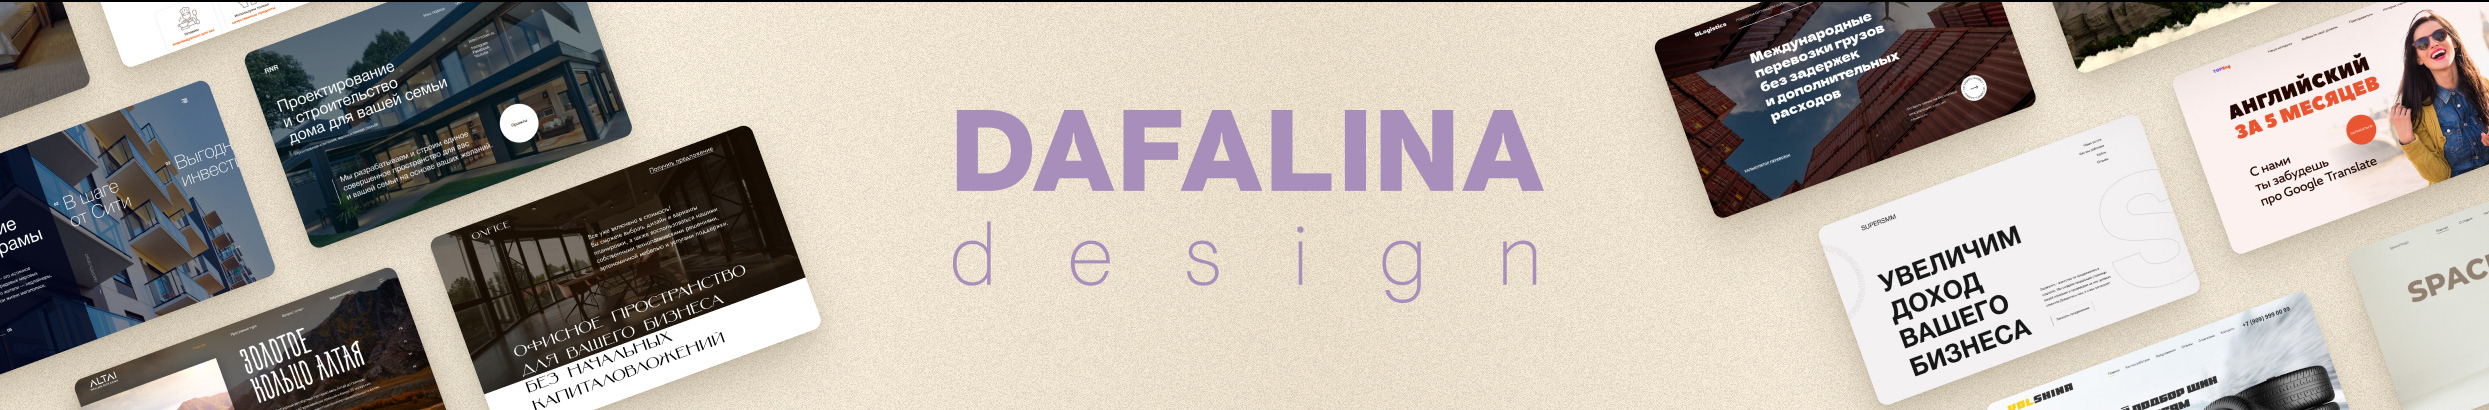 Dafalina Designs profilbanner